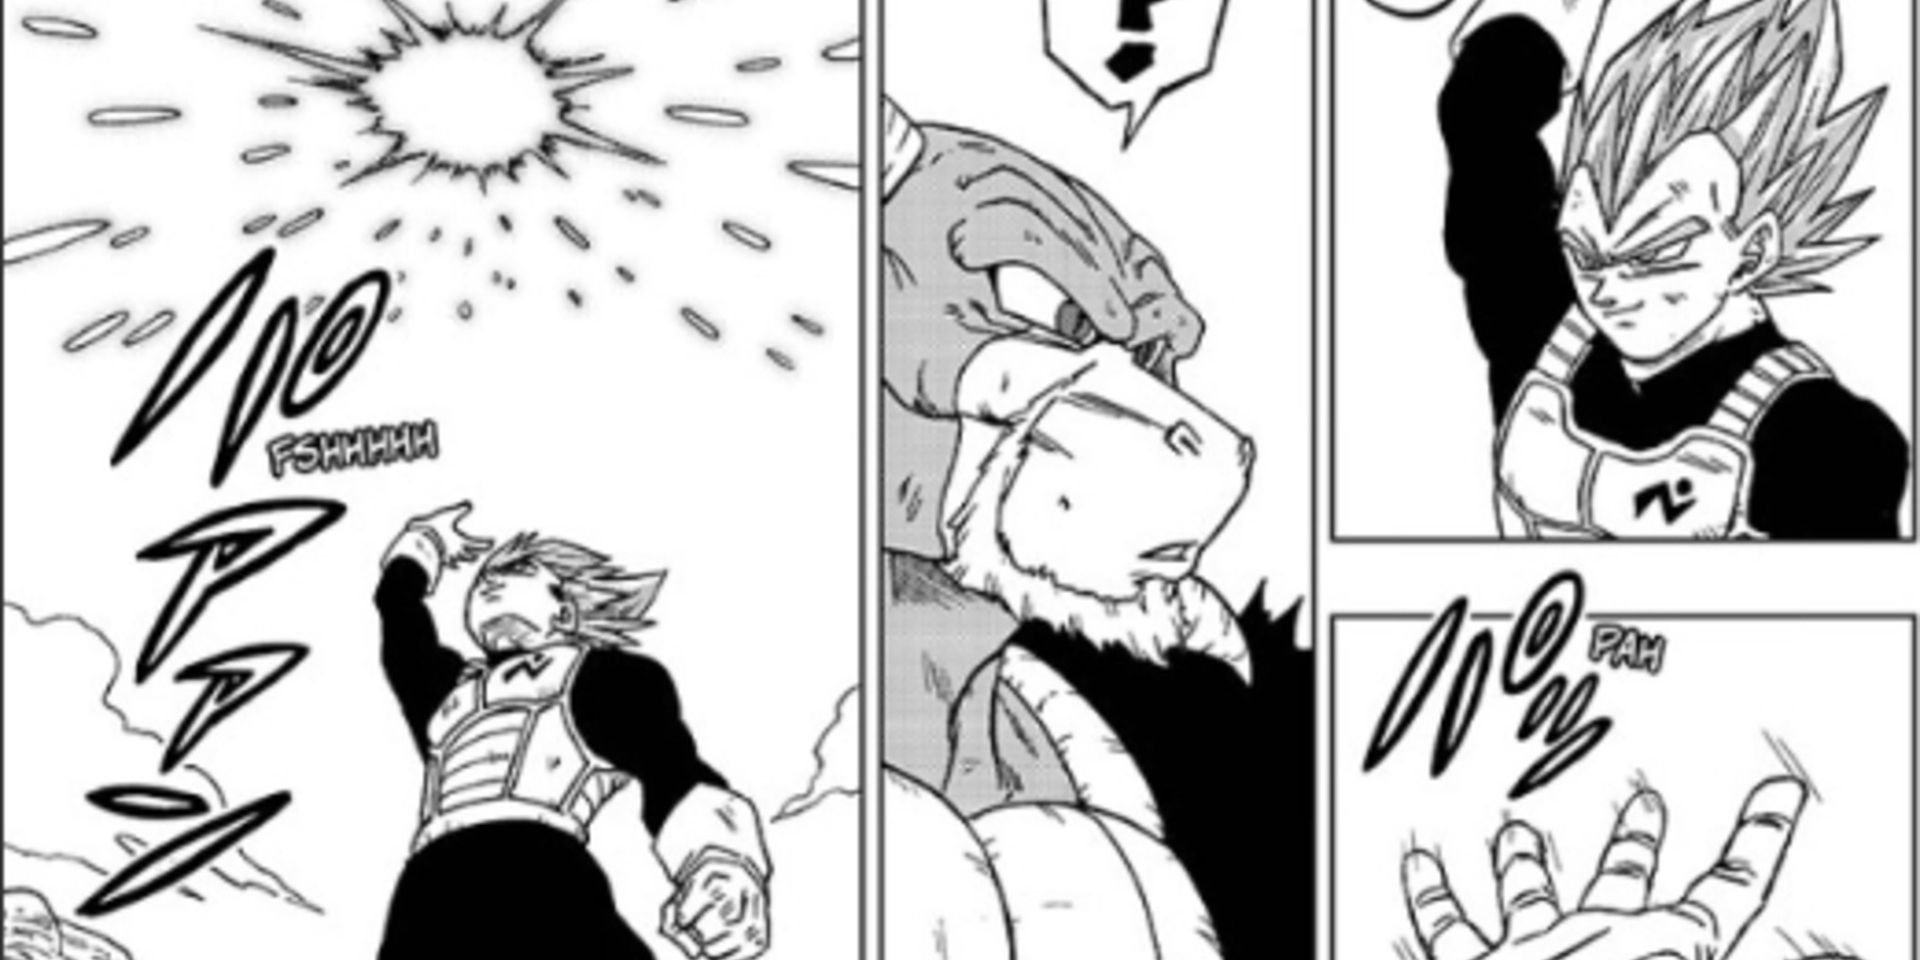 Vegeta uses Forced Spirit Fission against Moro in Dragon Ball Super manga.